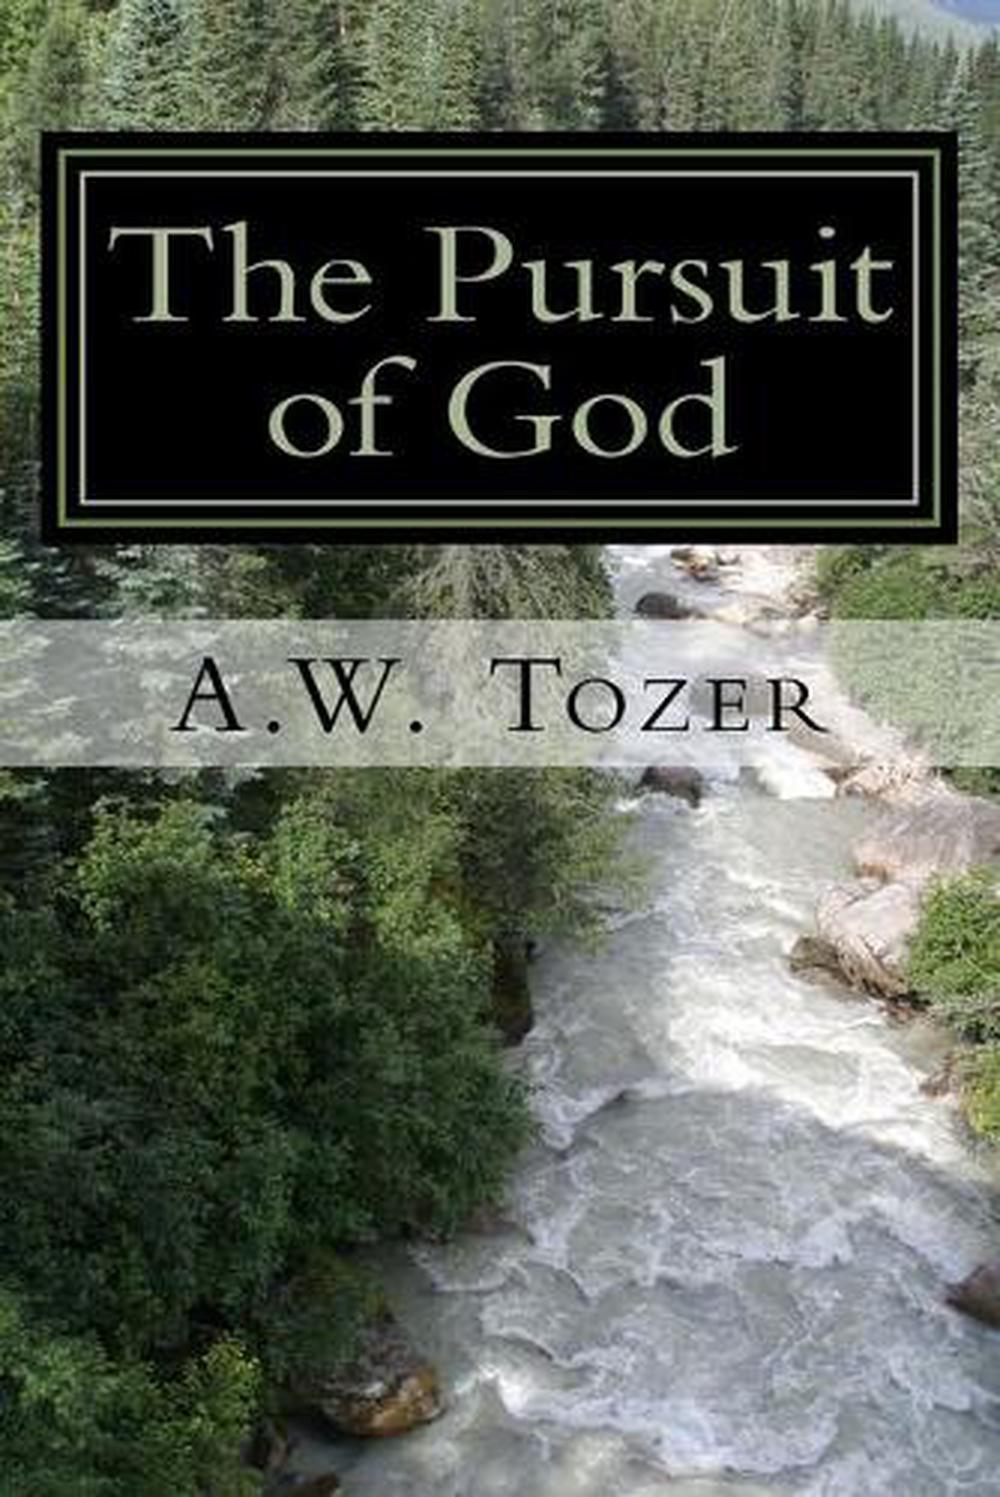 aw tozer books the pursuit of god